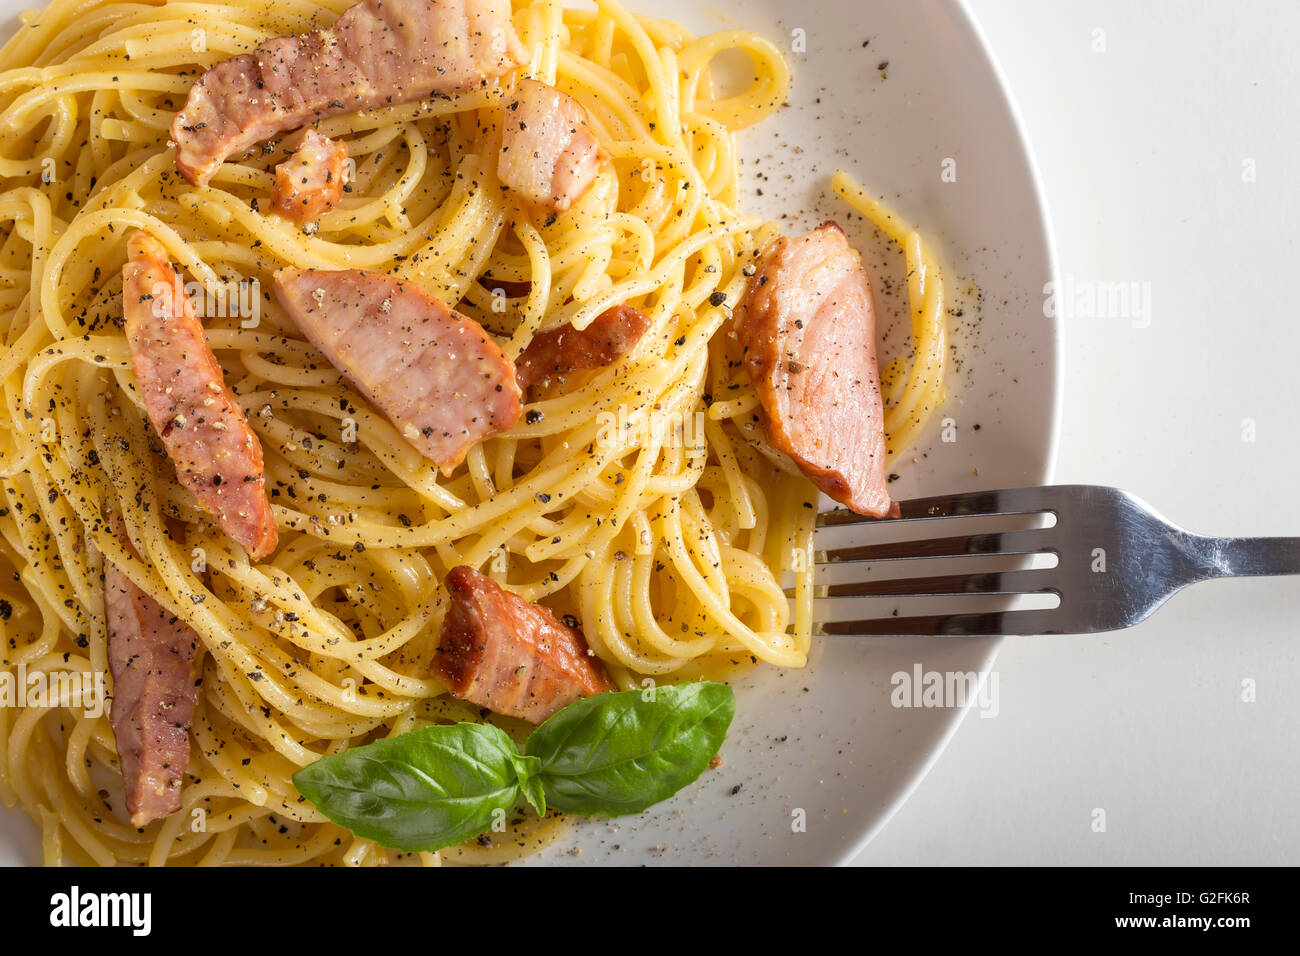 Spaghetti carbonara on white plate with fork Stock Photo